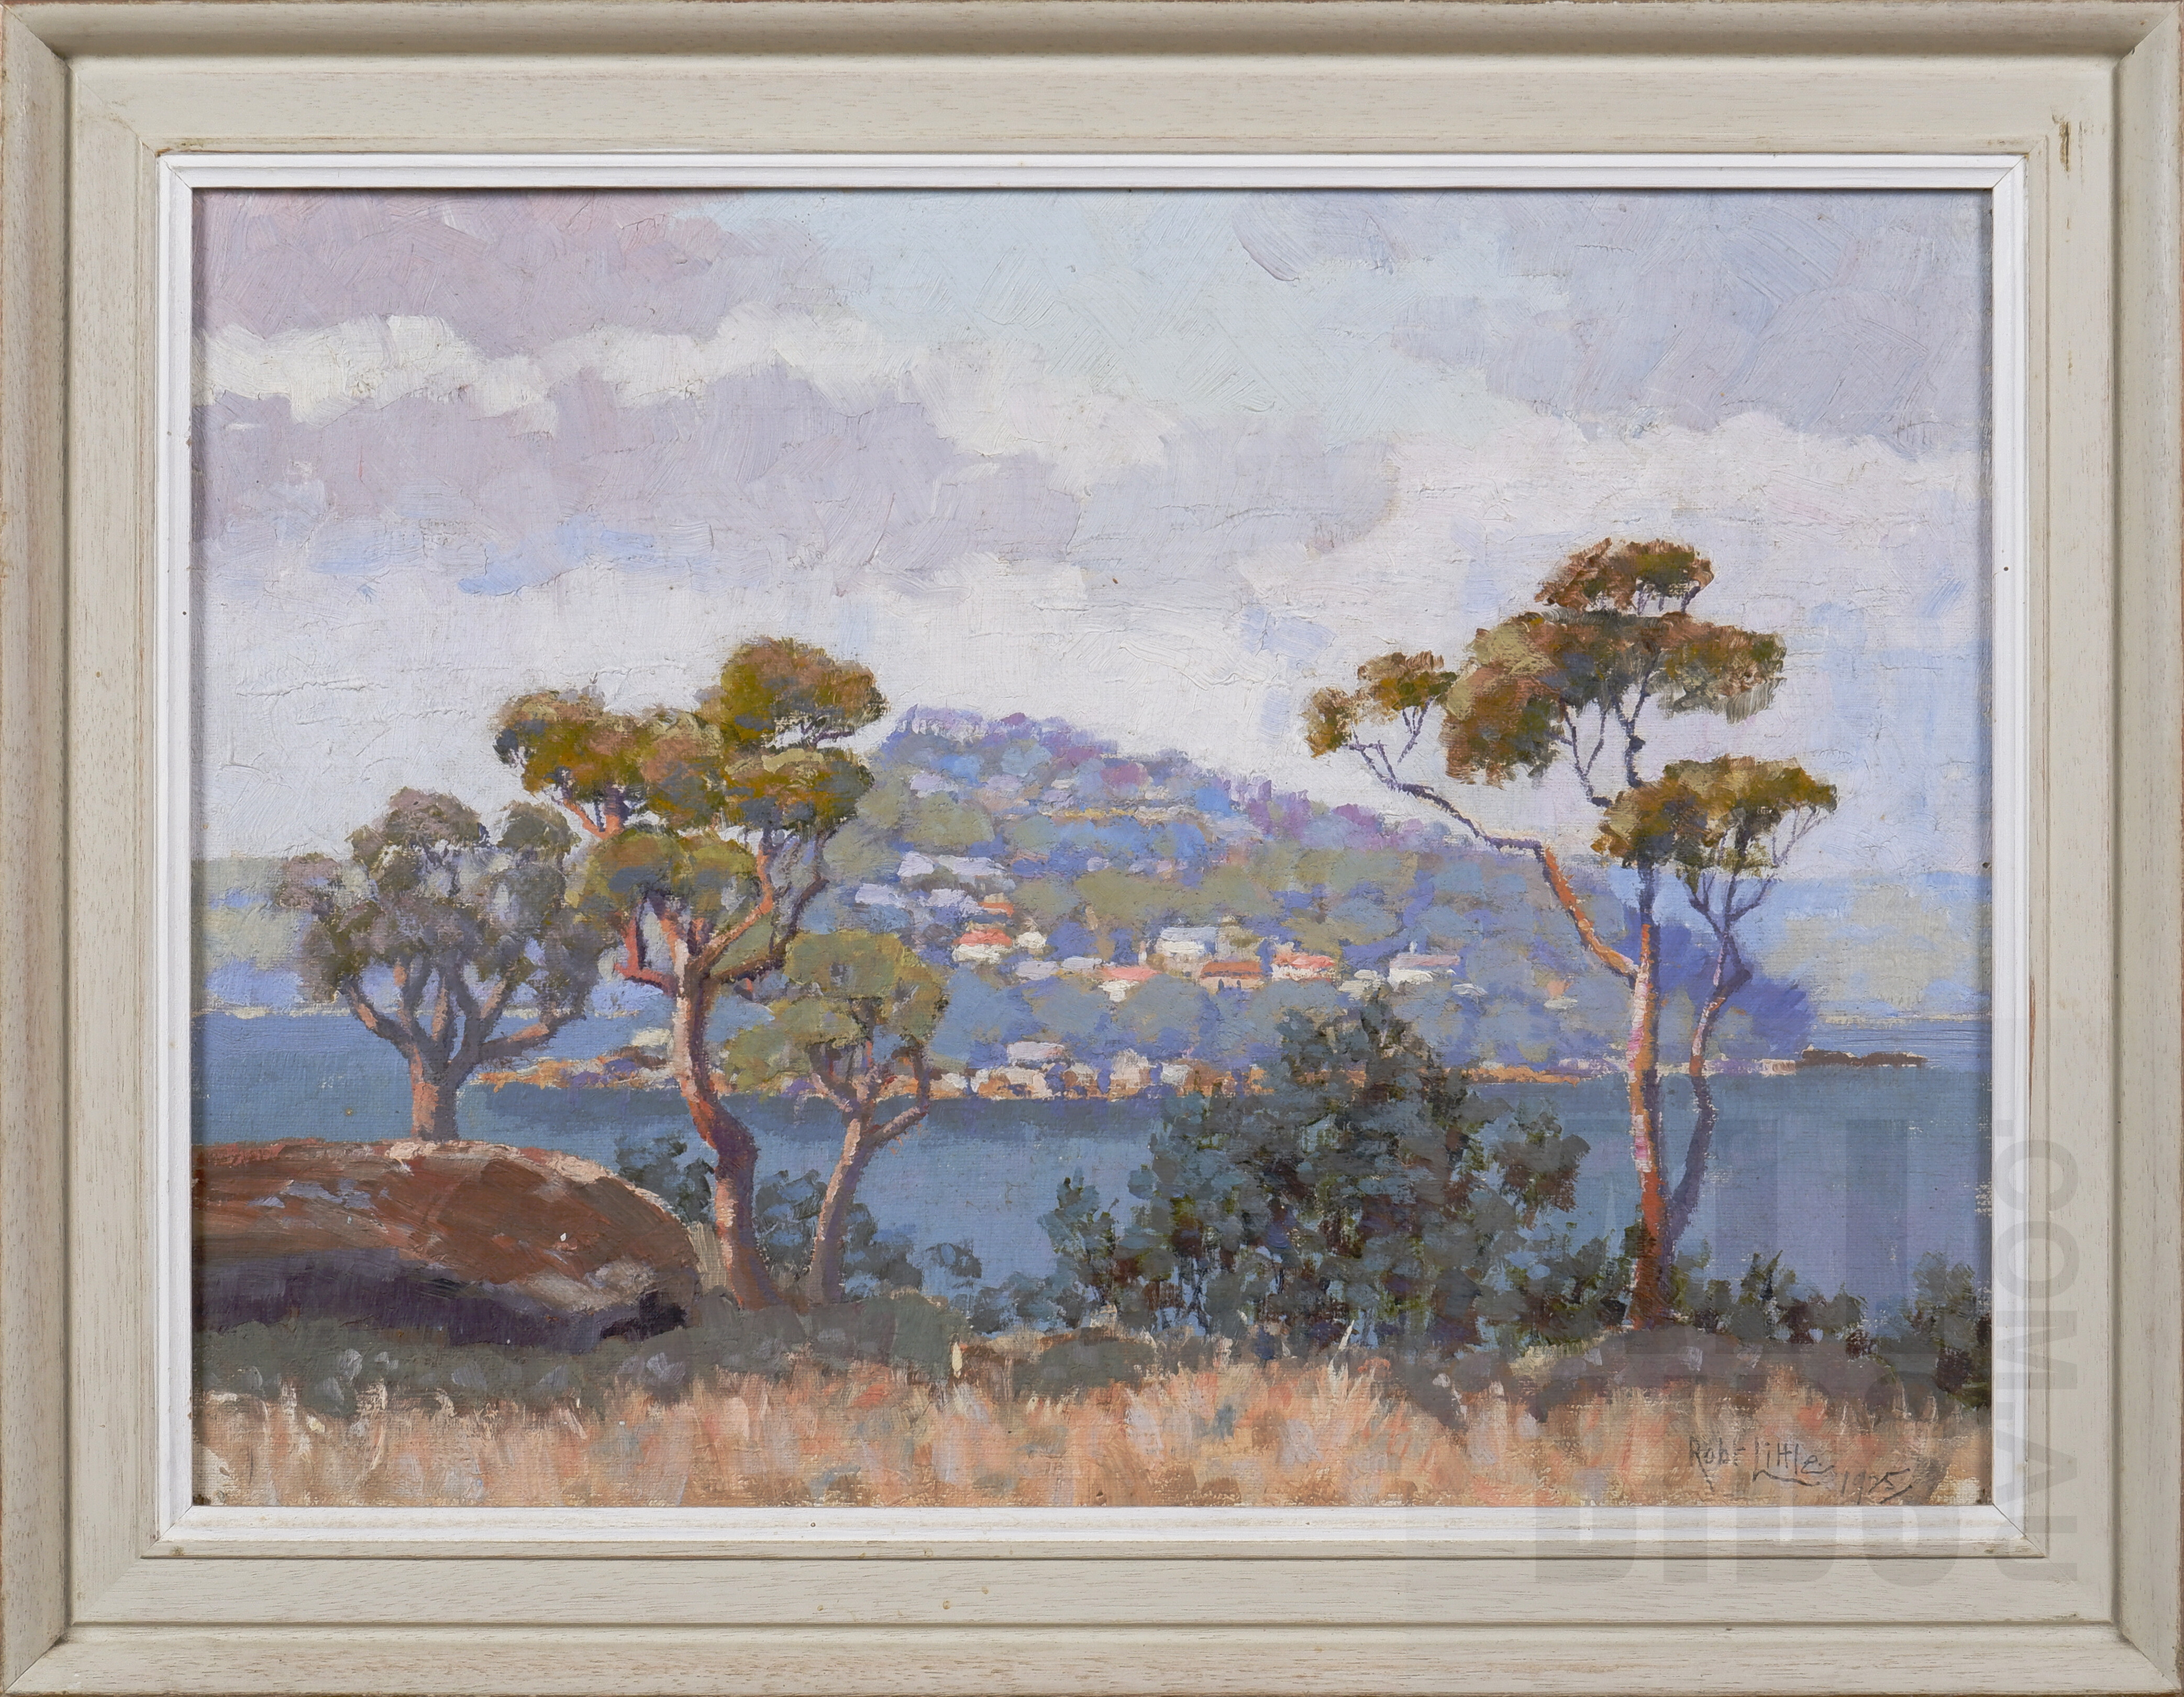 'Robert Little (Working c1903-27), Harbour View 1925, Oil on Board, 26 x 36 cm'